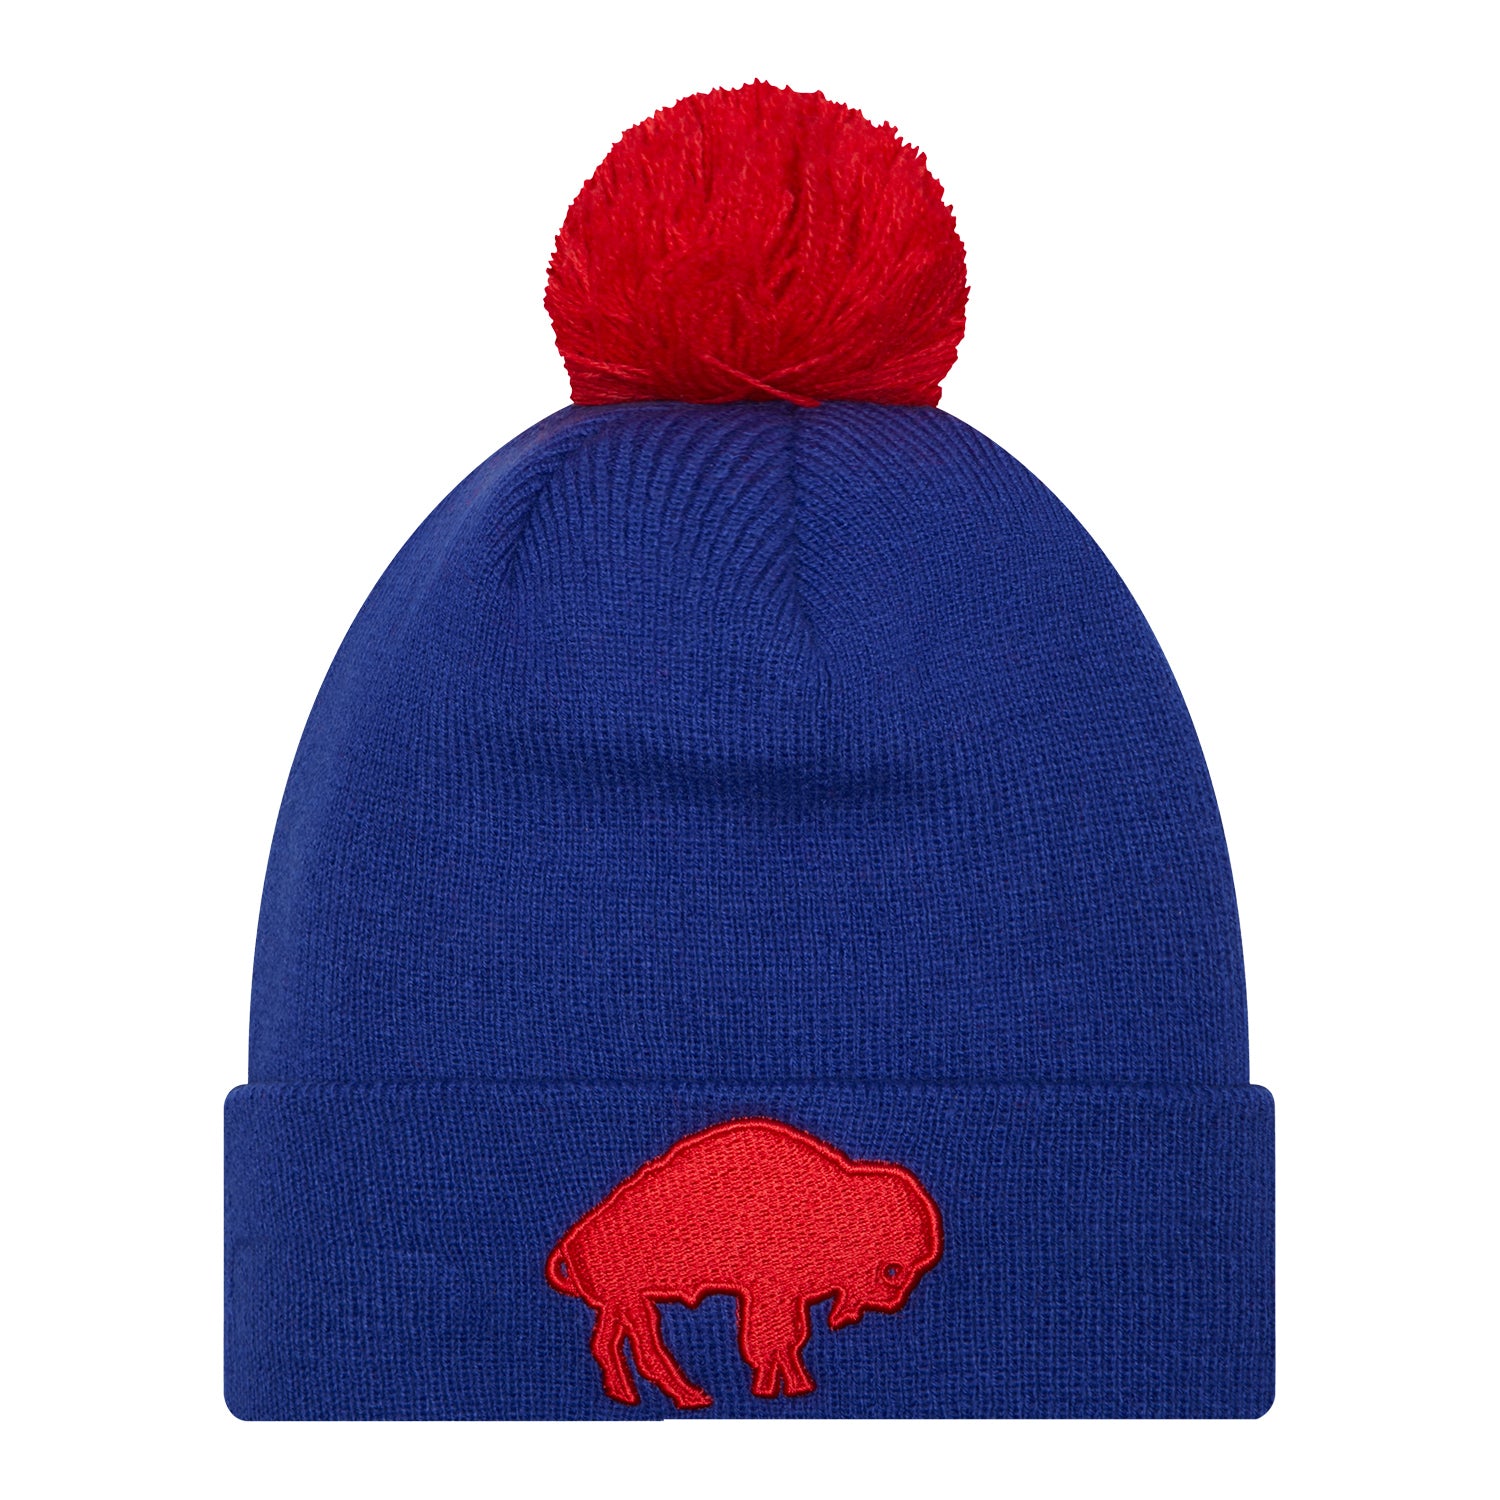 buffalo bills knit hat